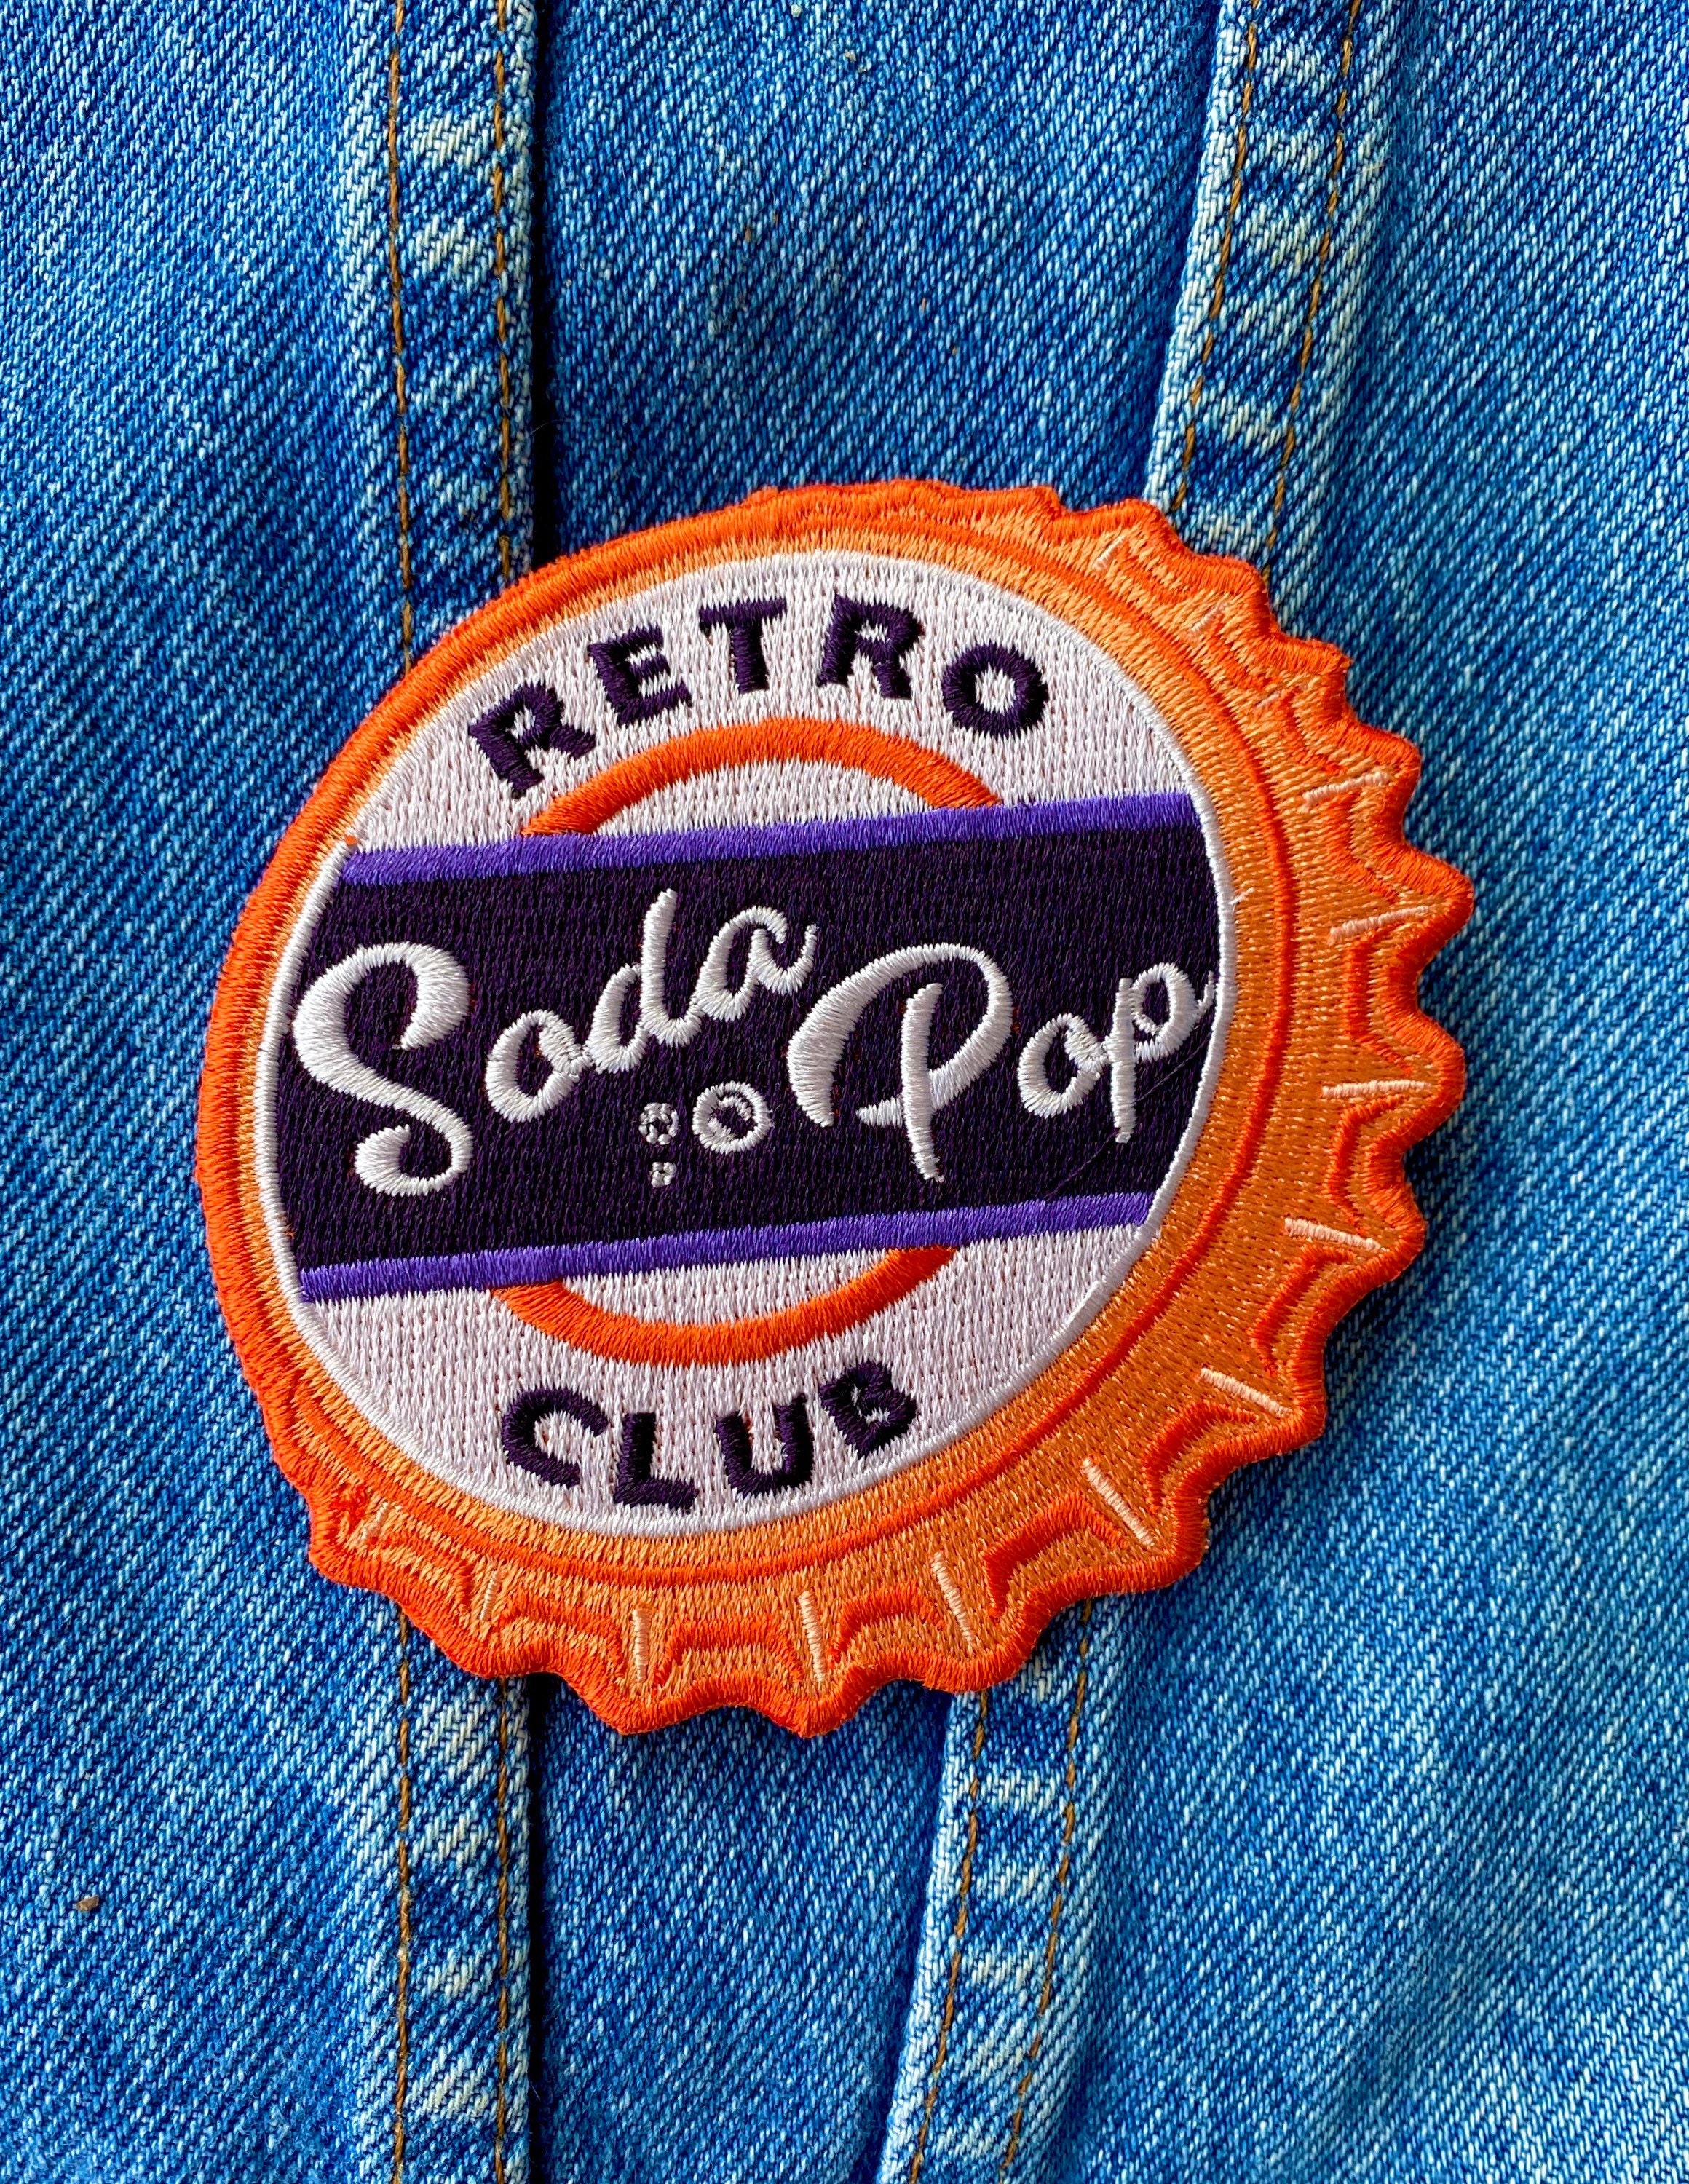 Retro Soda Pop Club Iron on Patch - Etsy